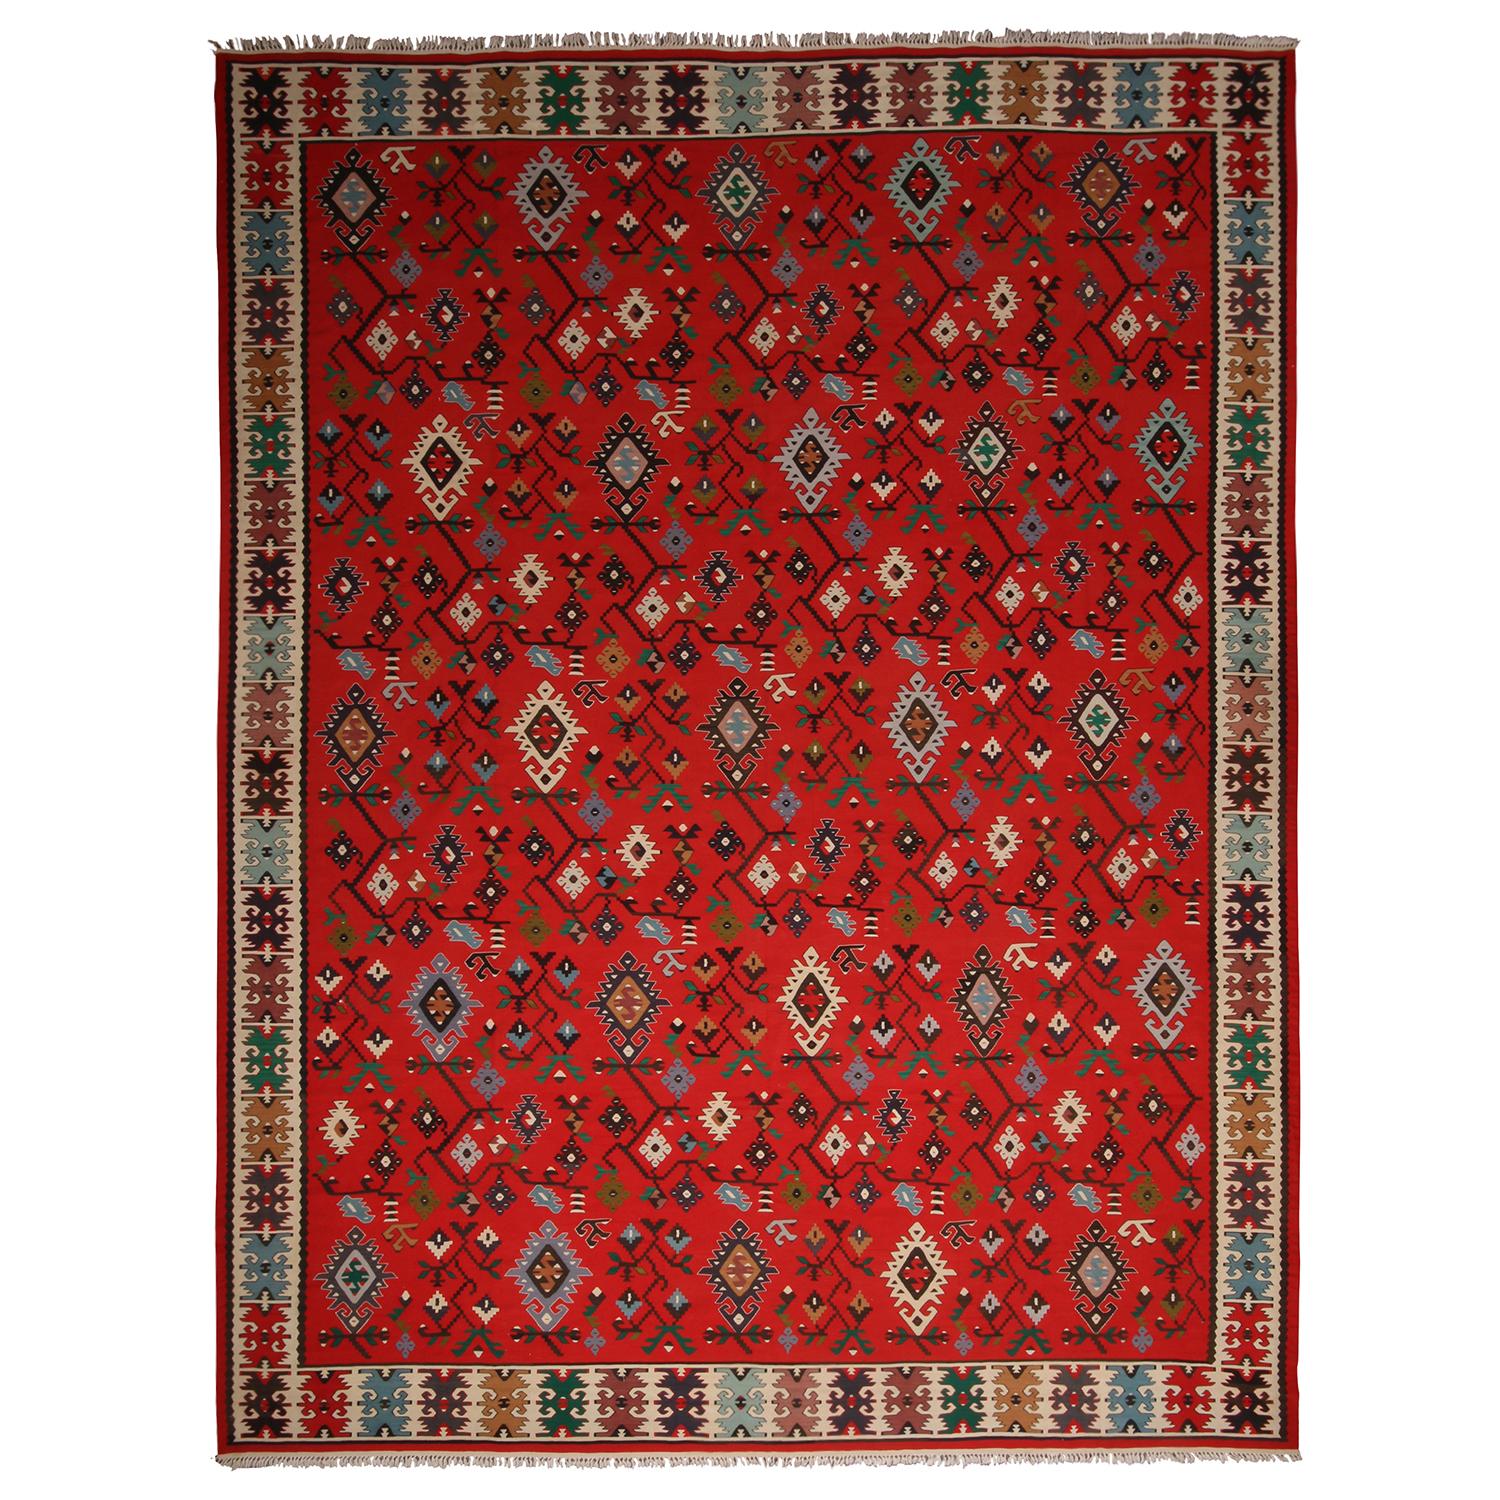 Antique Geometric Red and Beige Wool Kilim Rug by Rug & Kilim